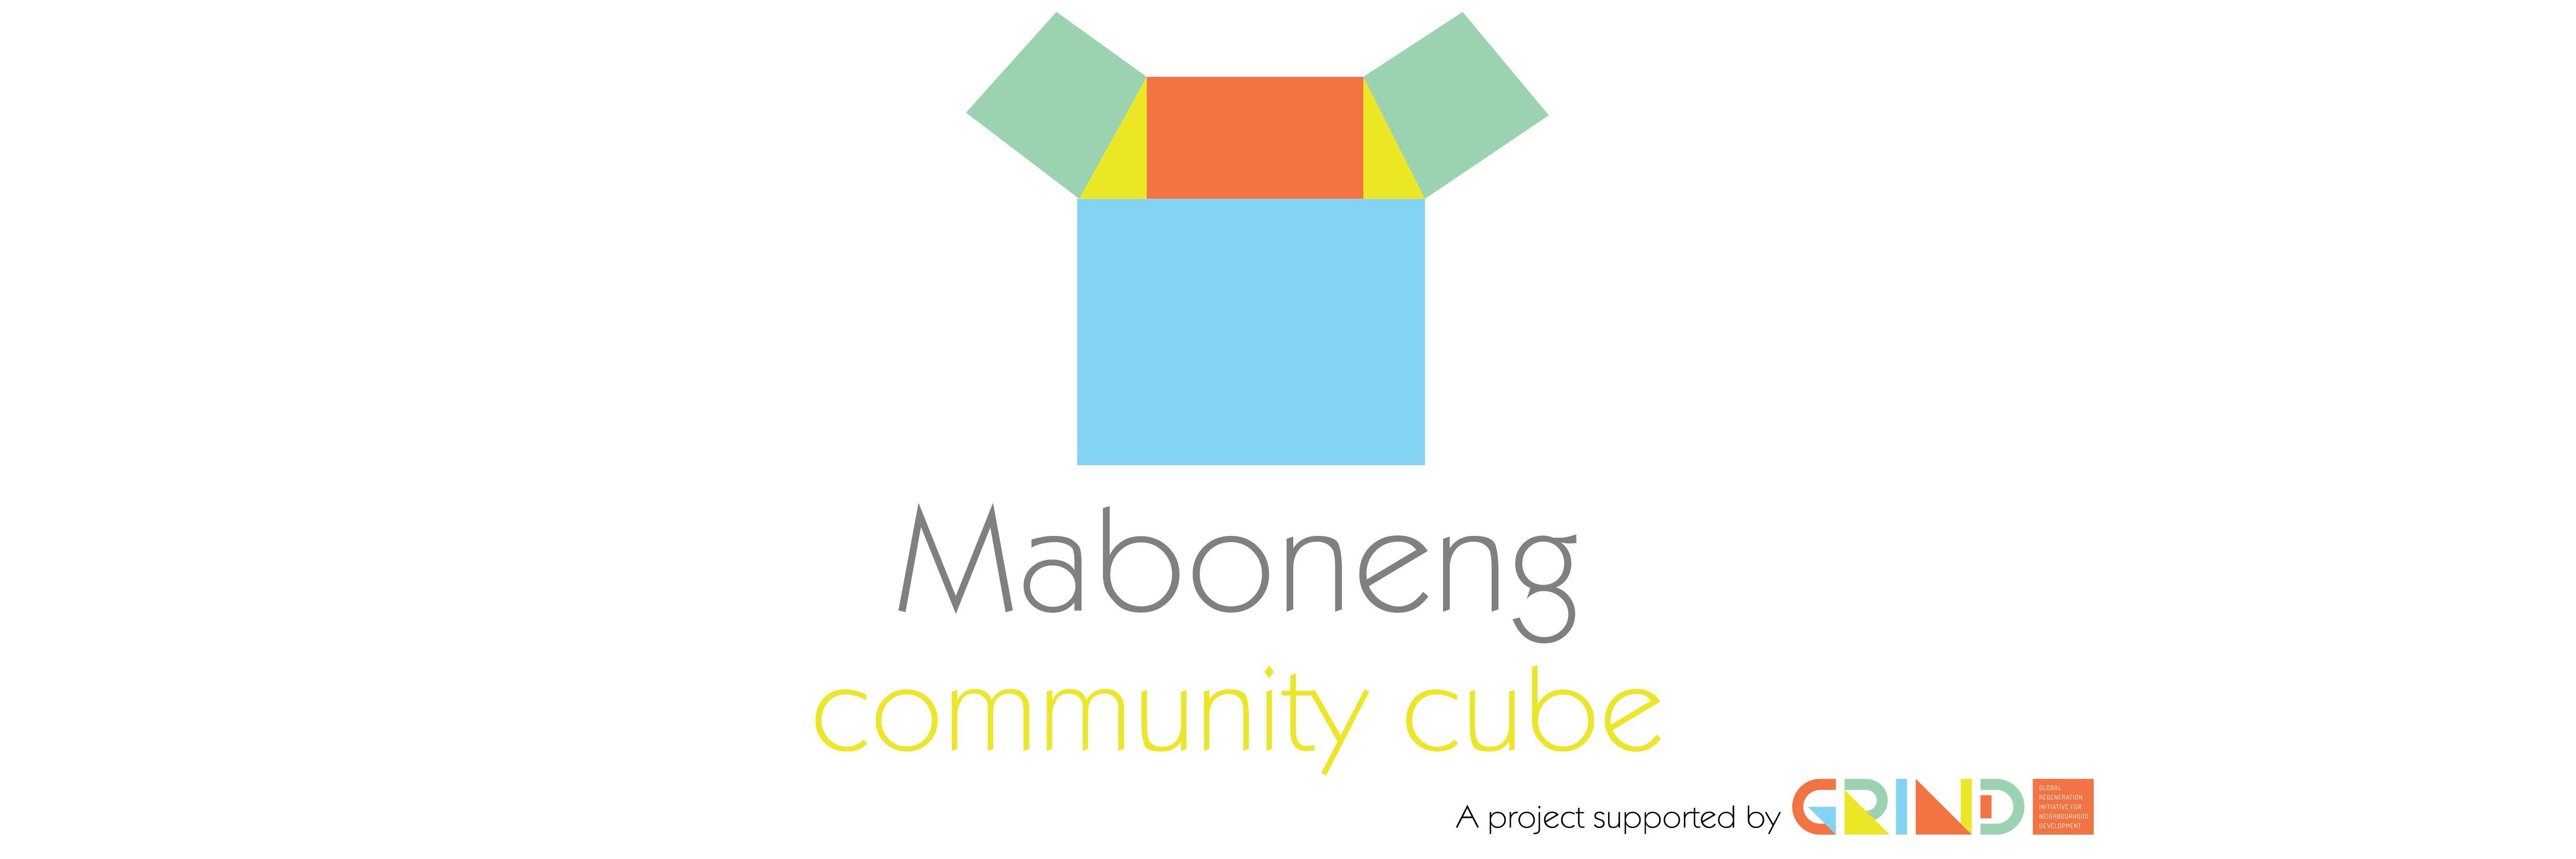 Yellow Cube Logo - A Cube Takes Shape | urbanter